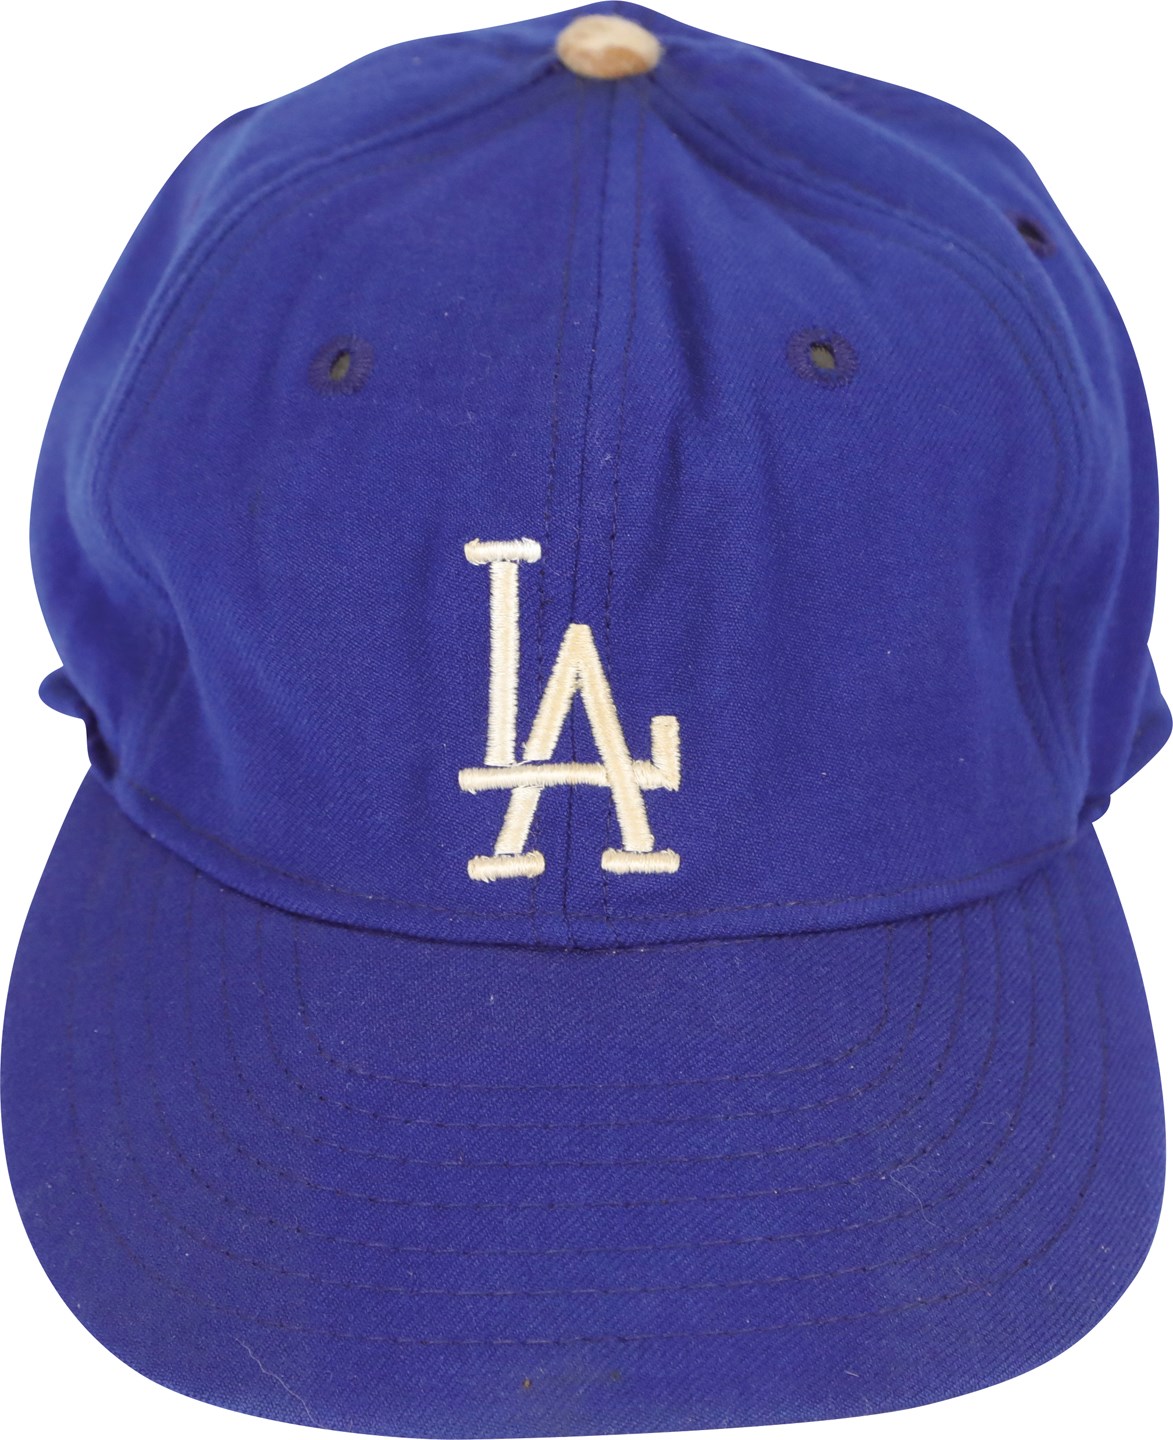 Baseball Equipment - 1965 Sandy Koufax Game Worn Hat from Triple Crown & Cy Young Award Year (Locker Room Provenance)